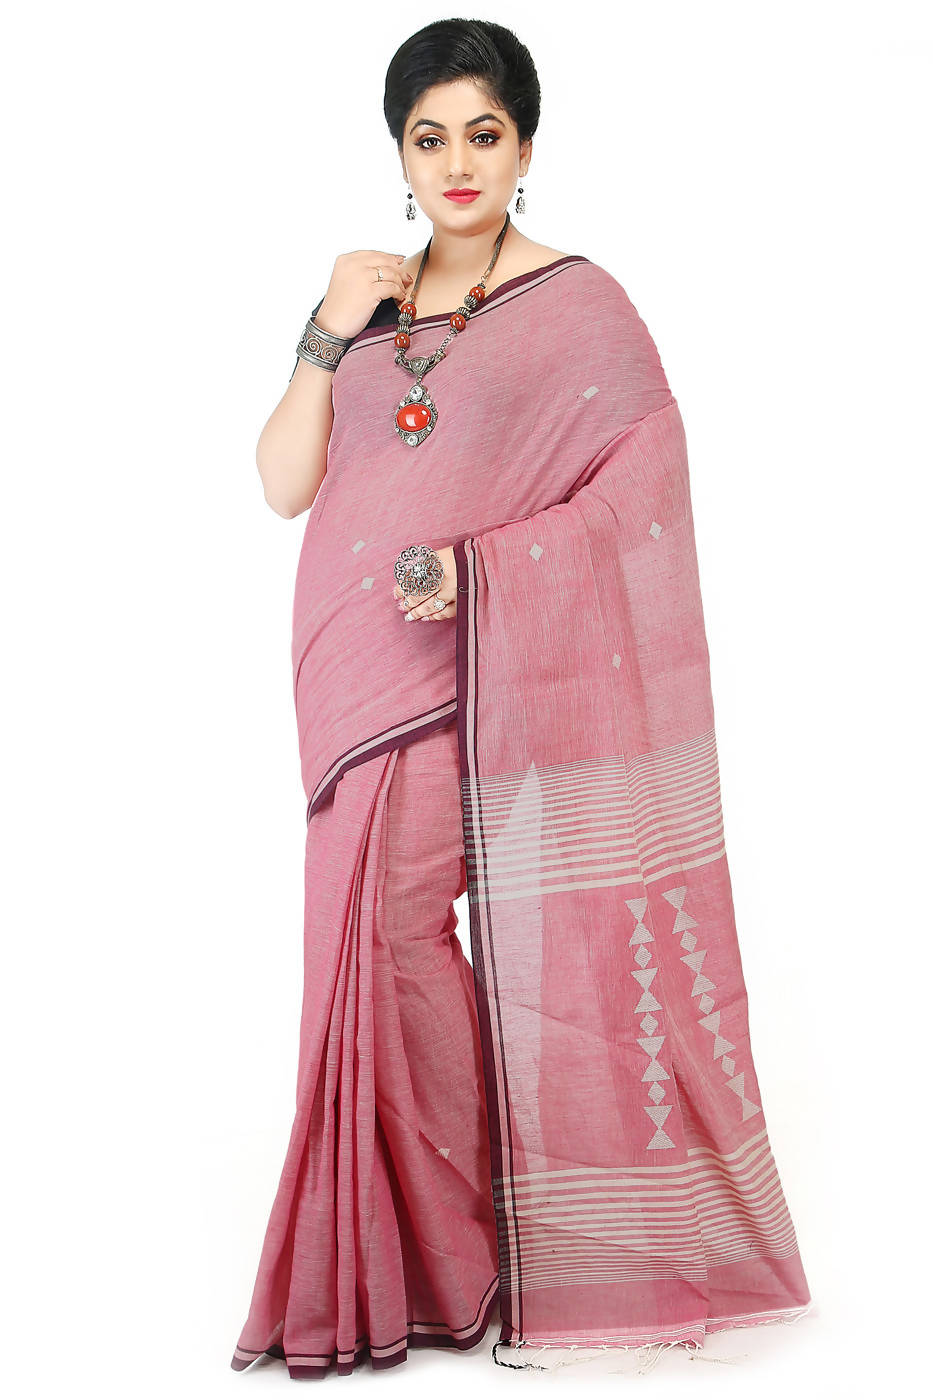 Handloom bengal baby pink cotton saree